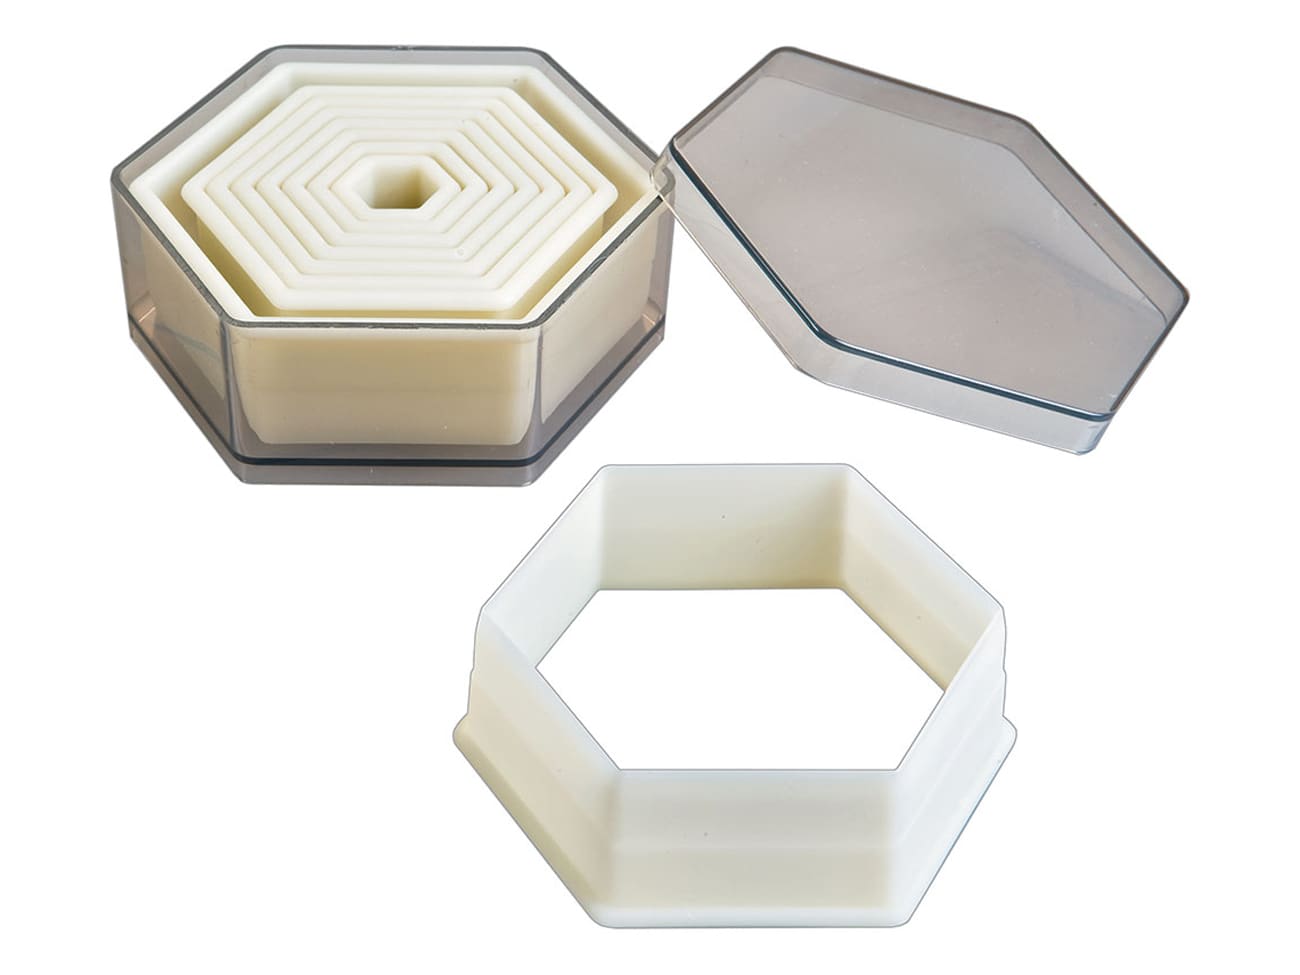 Hexagonal pasta cutter set - Martellato